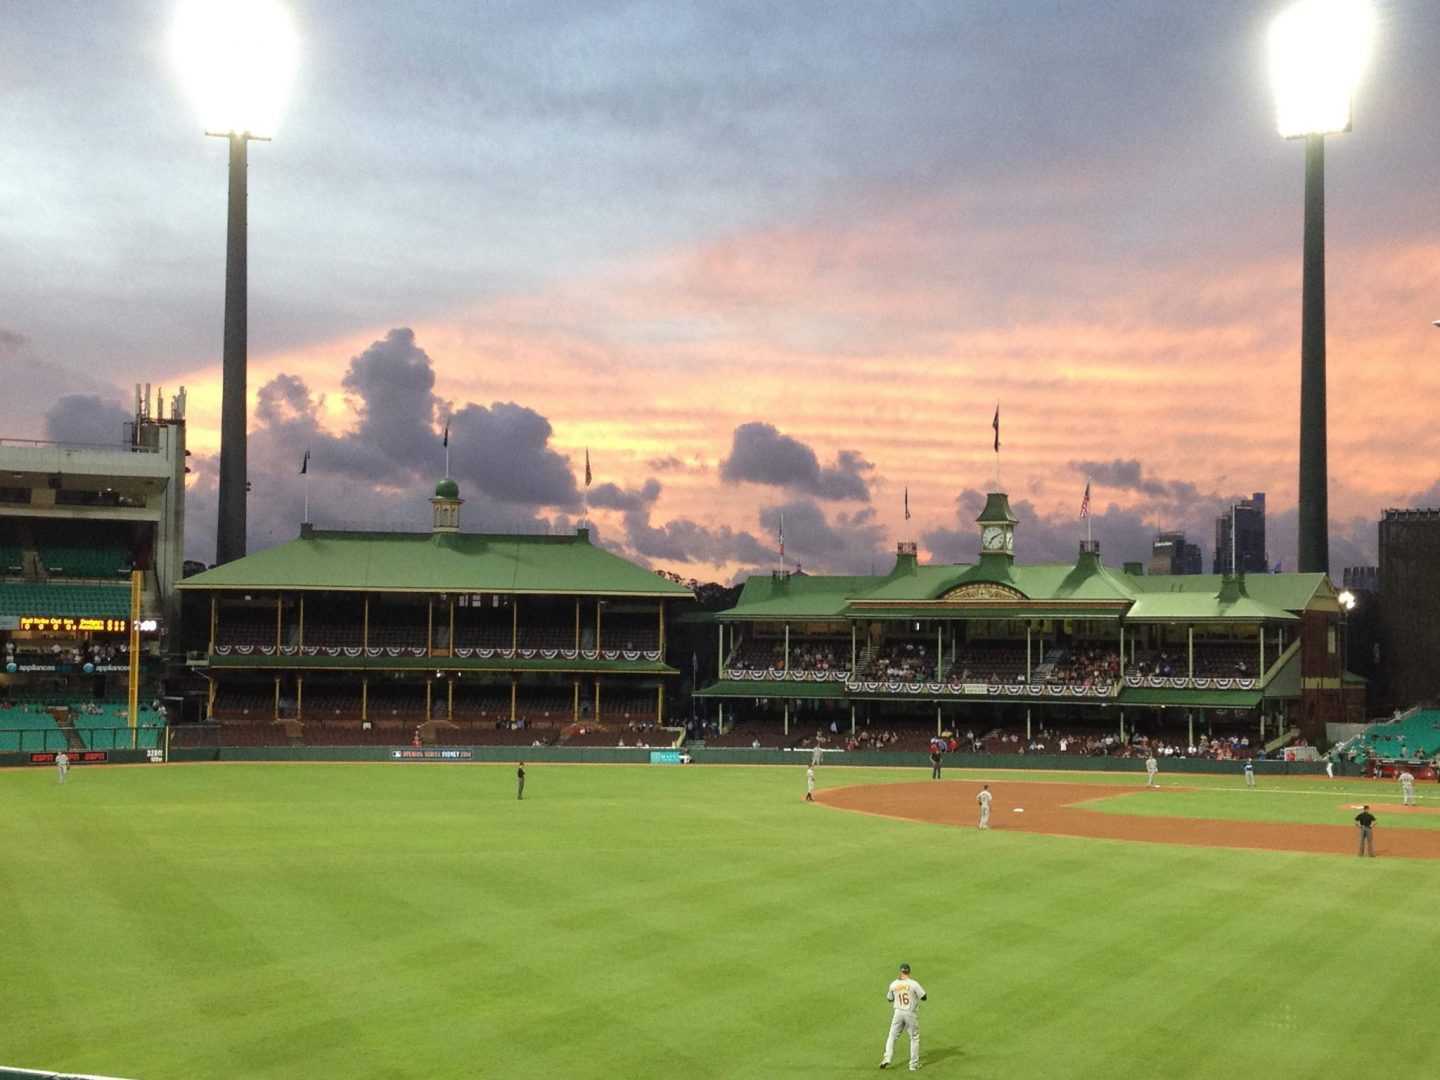 A beautiful sunset over Sydney Cricket Ground